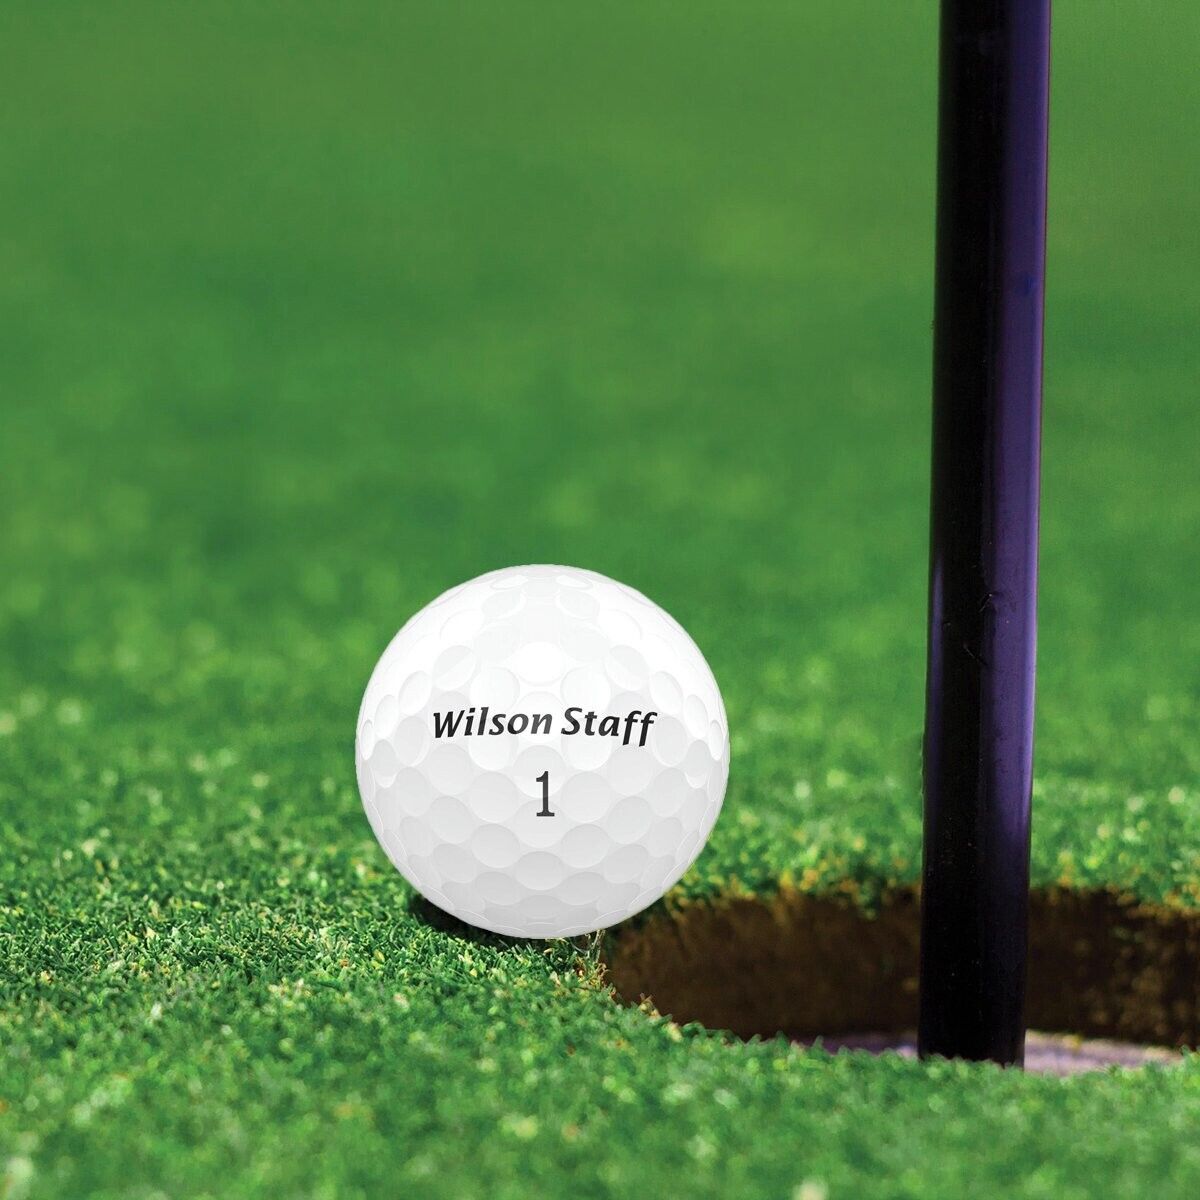 Wilson Staff Zip 302 Golf Balls - 12 Ball Pack - 2B1 Performance Achieved